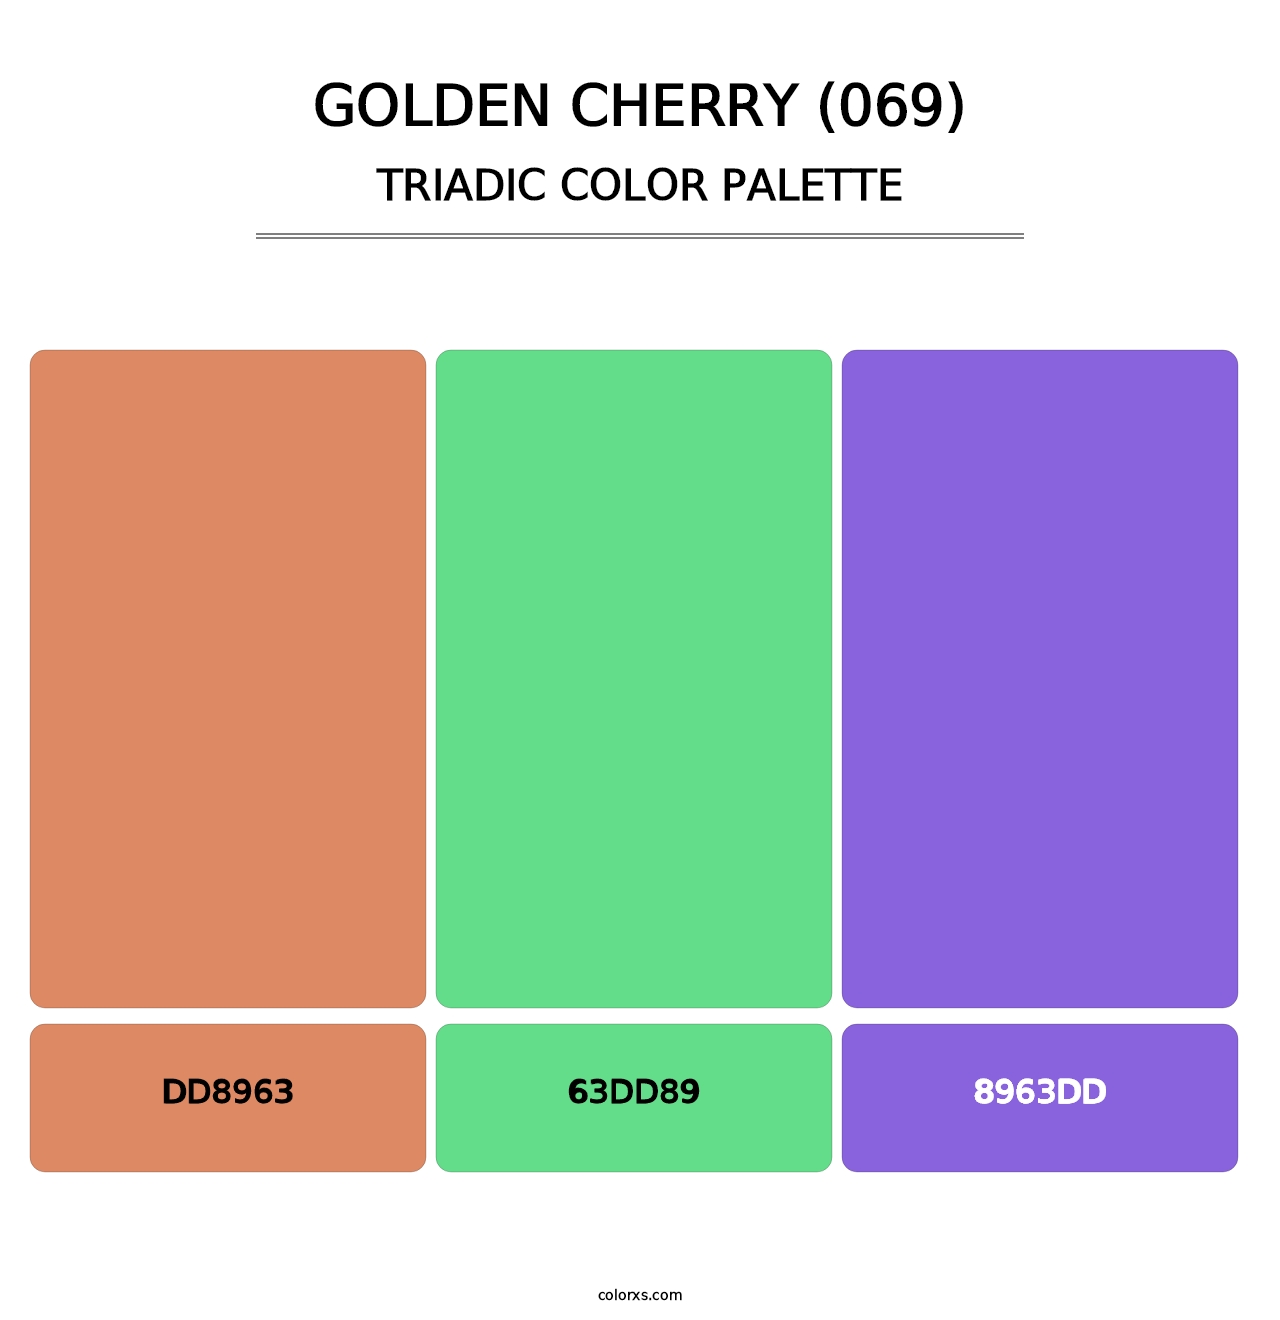 Golden Cherry (069) - Triadic Color Palette